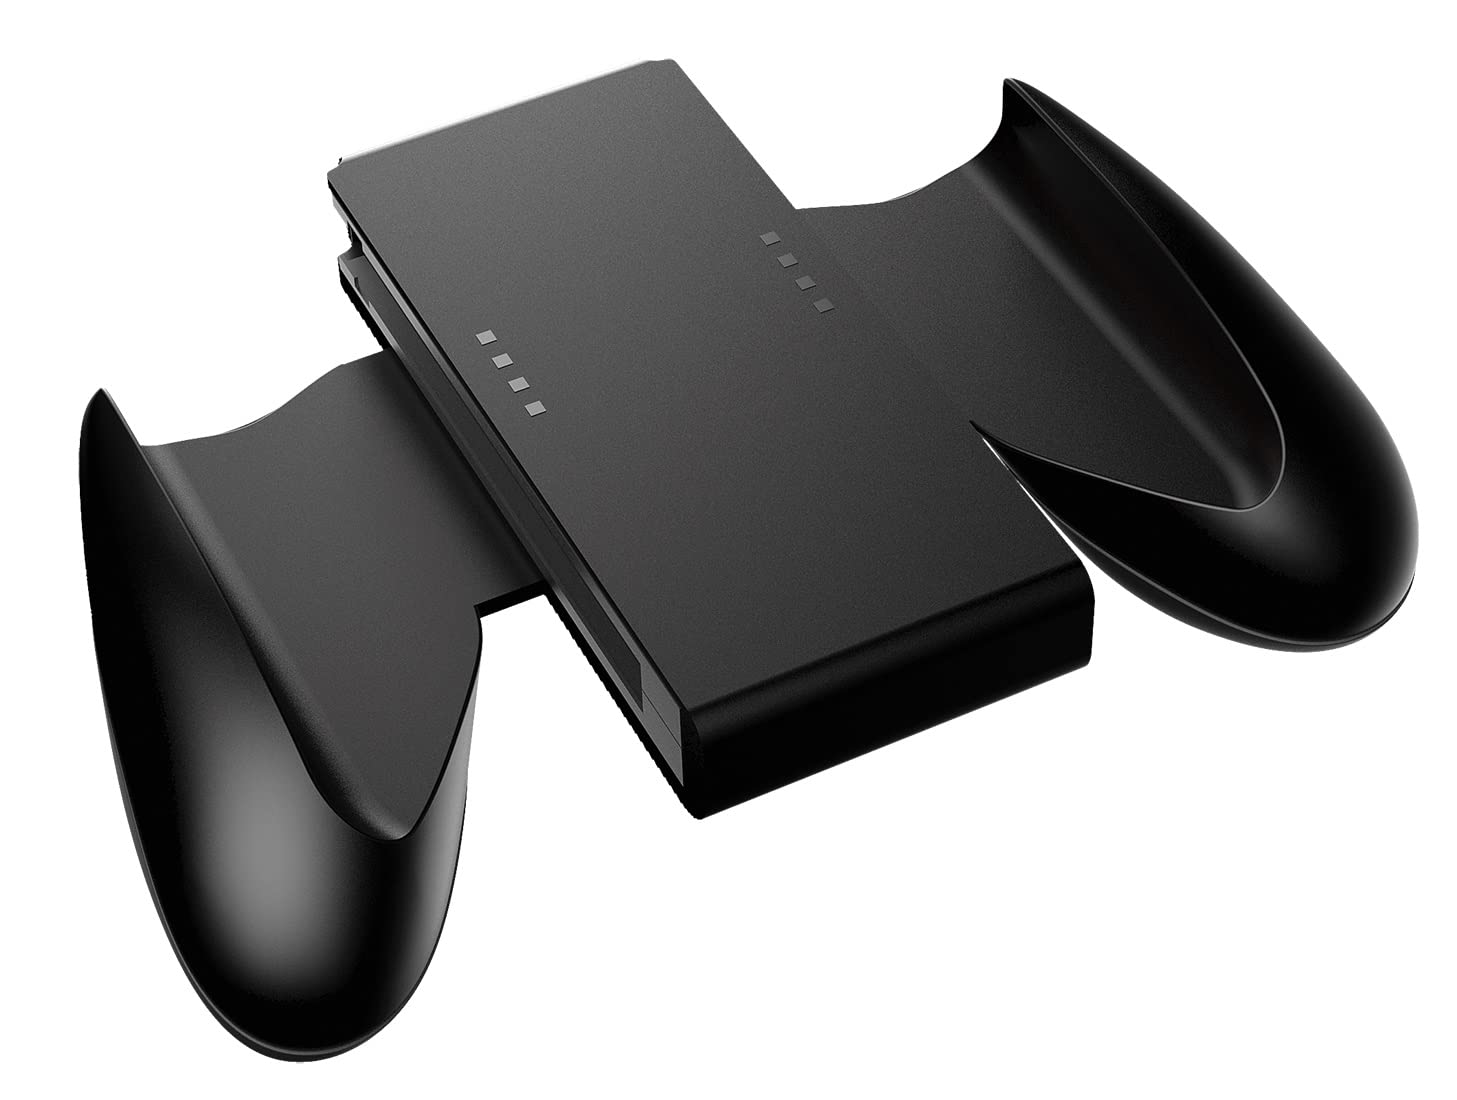 PowerA Joy Con Comfort Grips for Nintendo Switch - Black